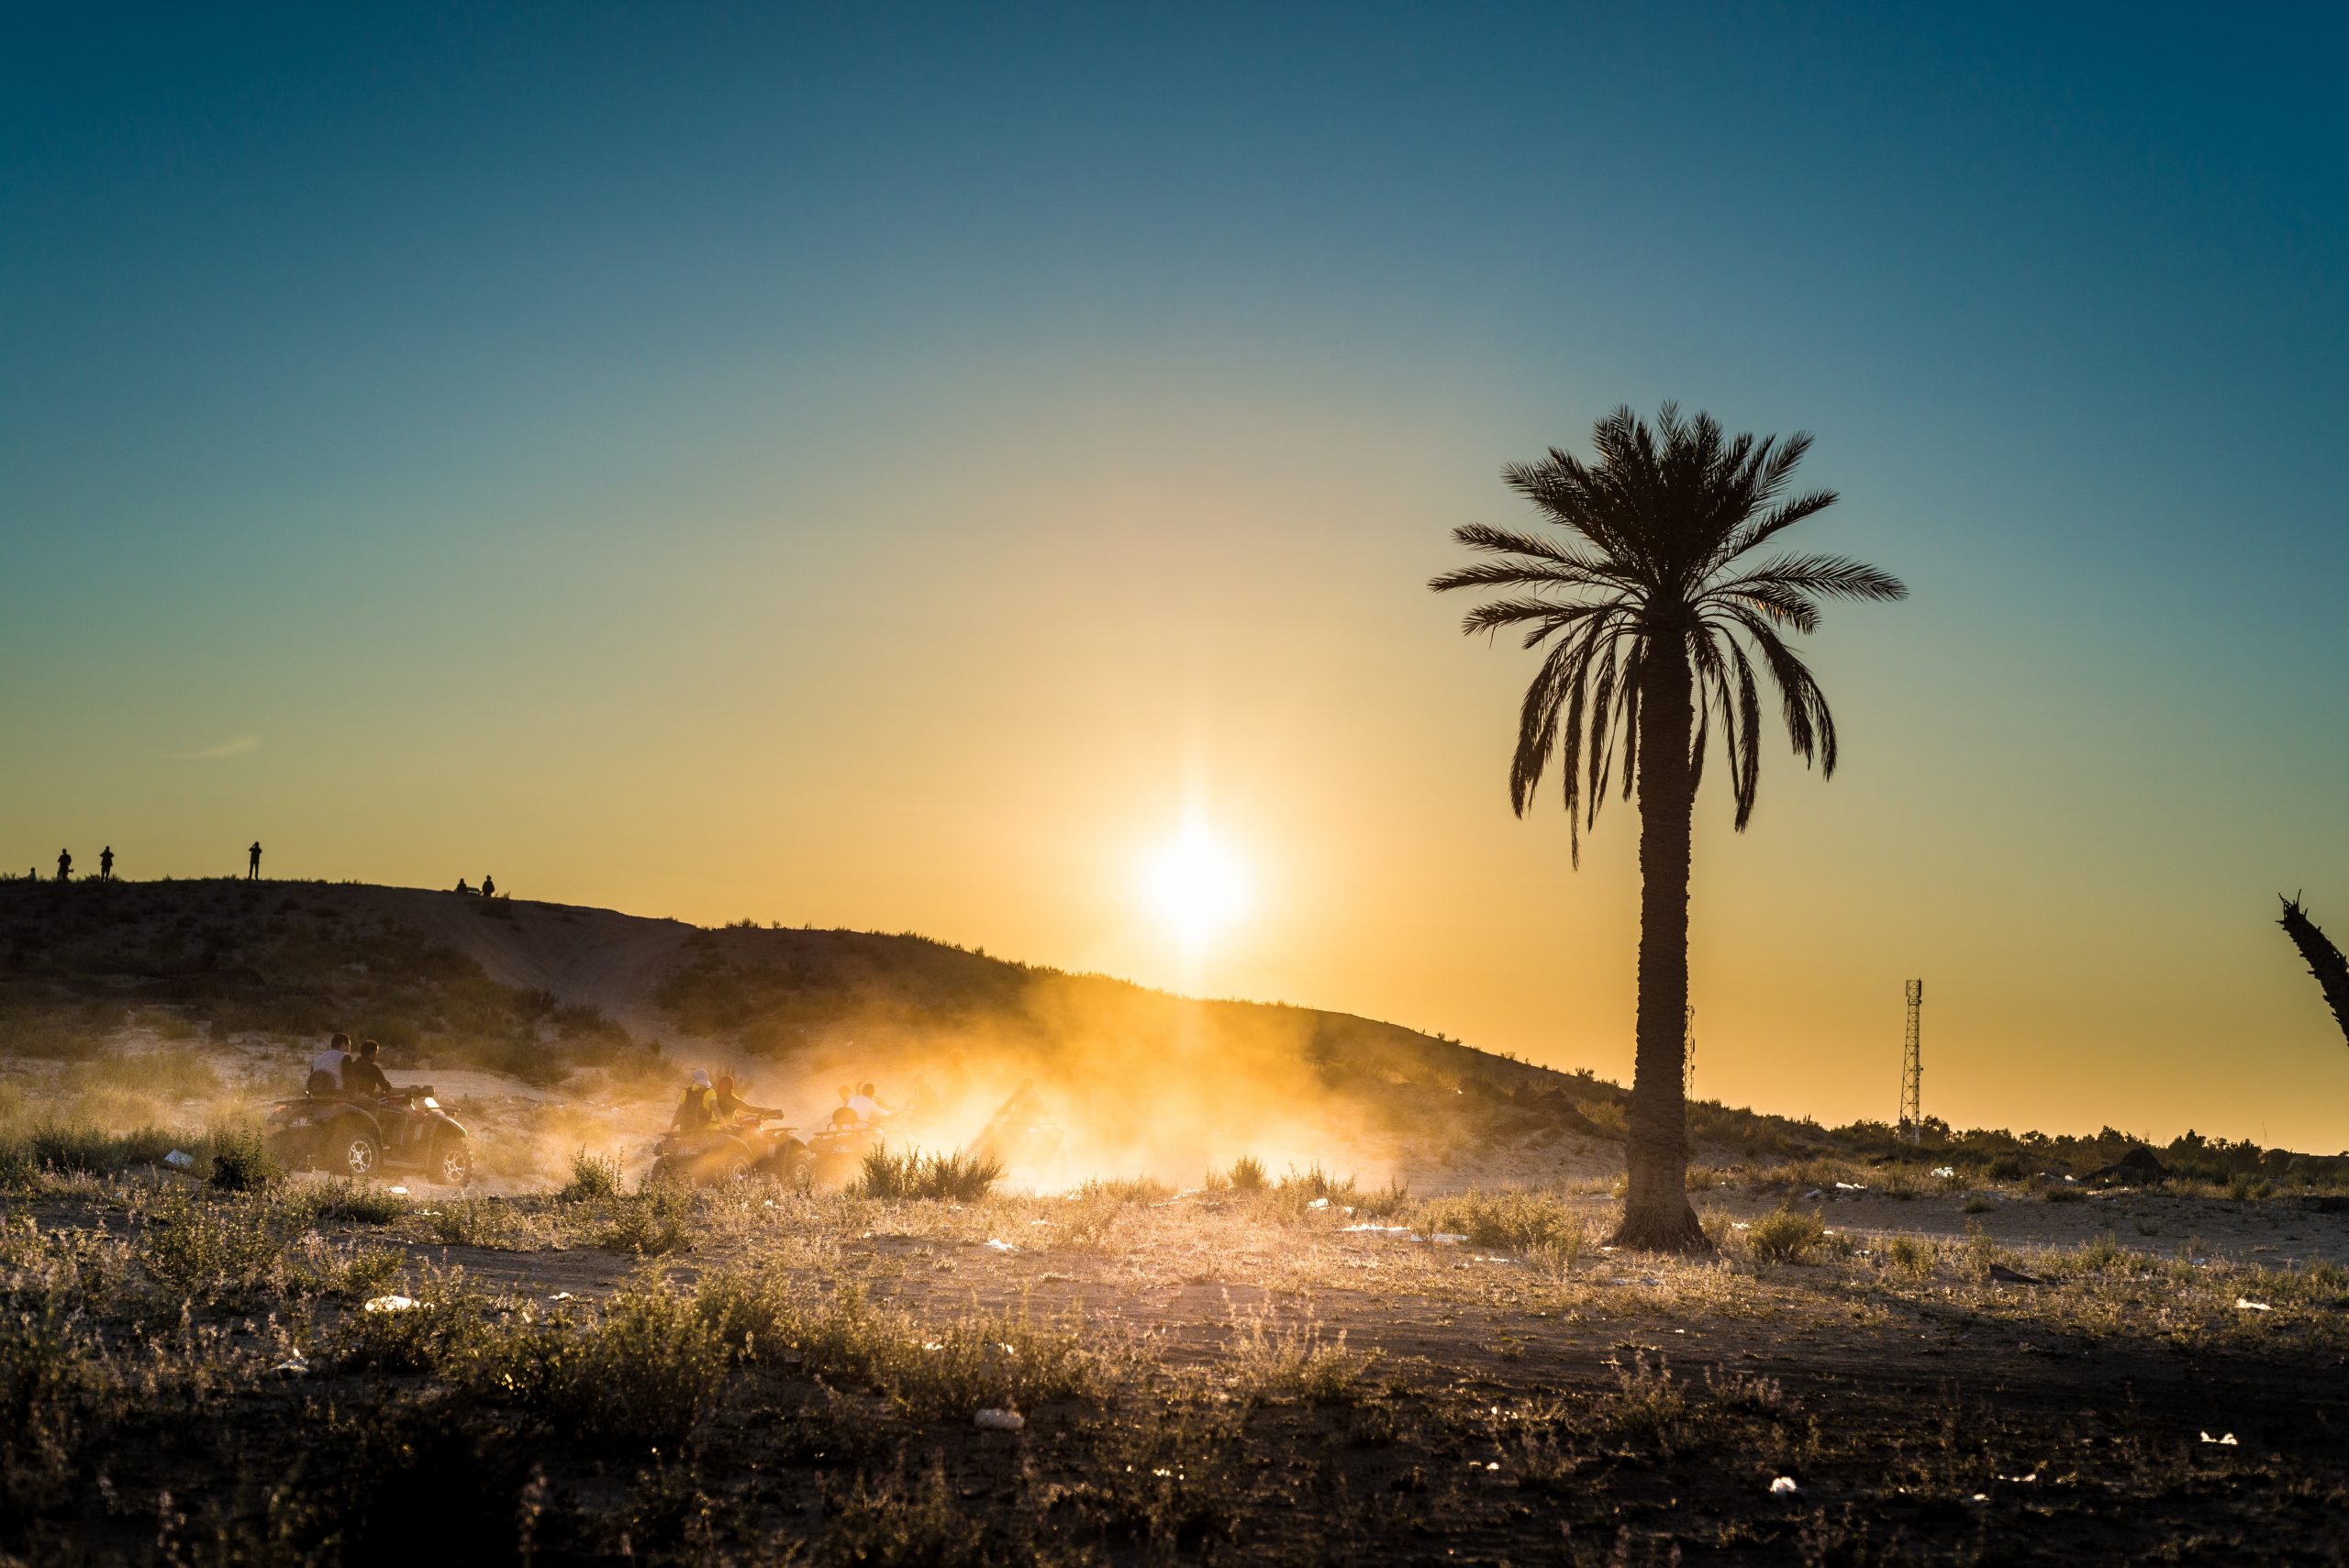 Desert activities in Tunisia